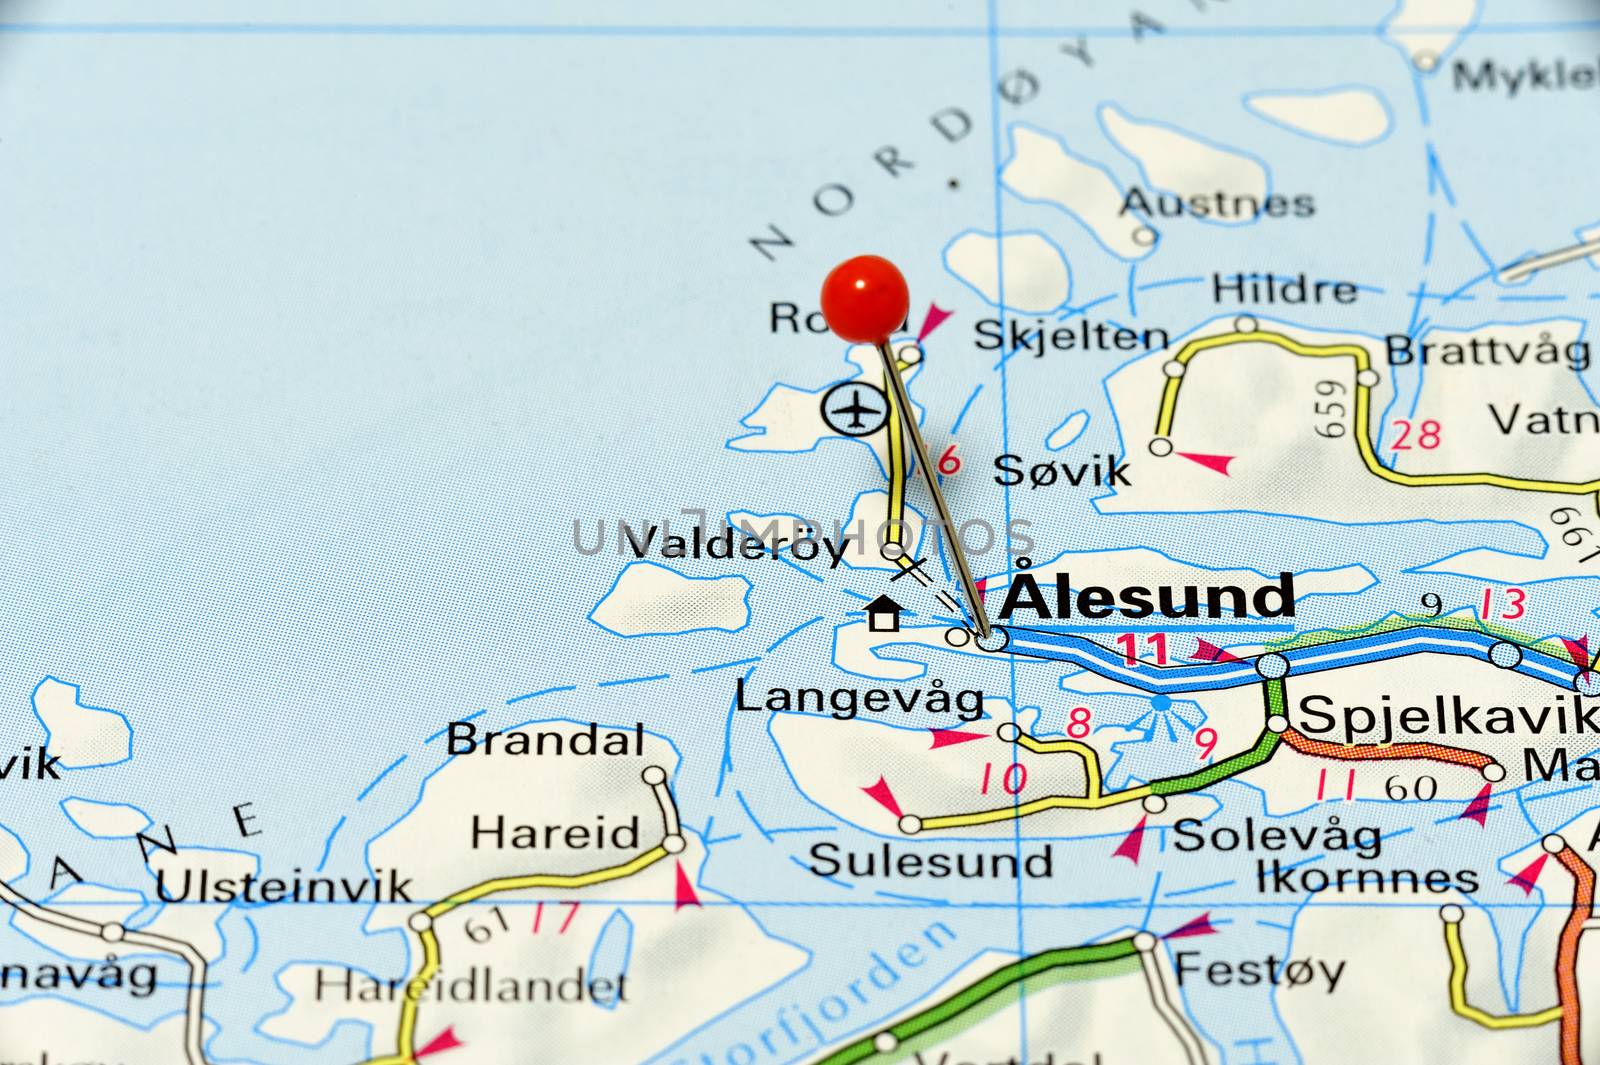 Closeup map of Ålesund. Ålesund a city in Norway.